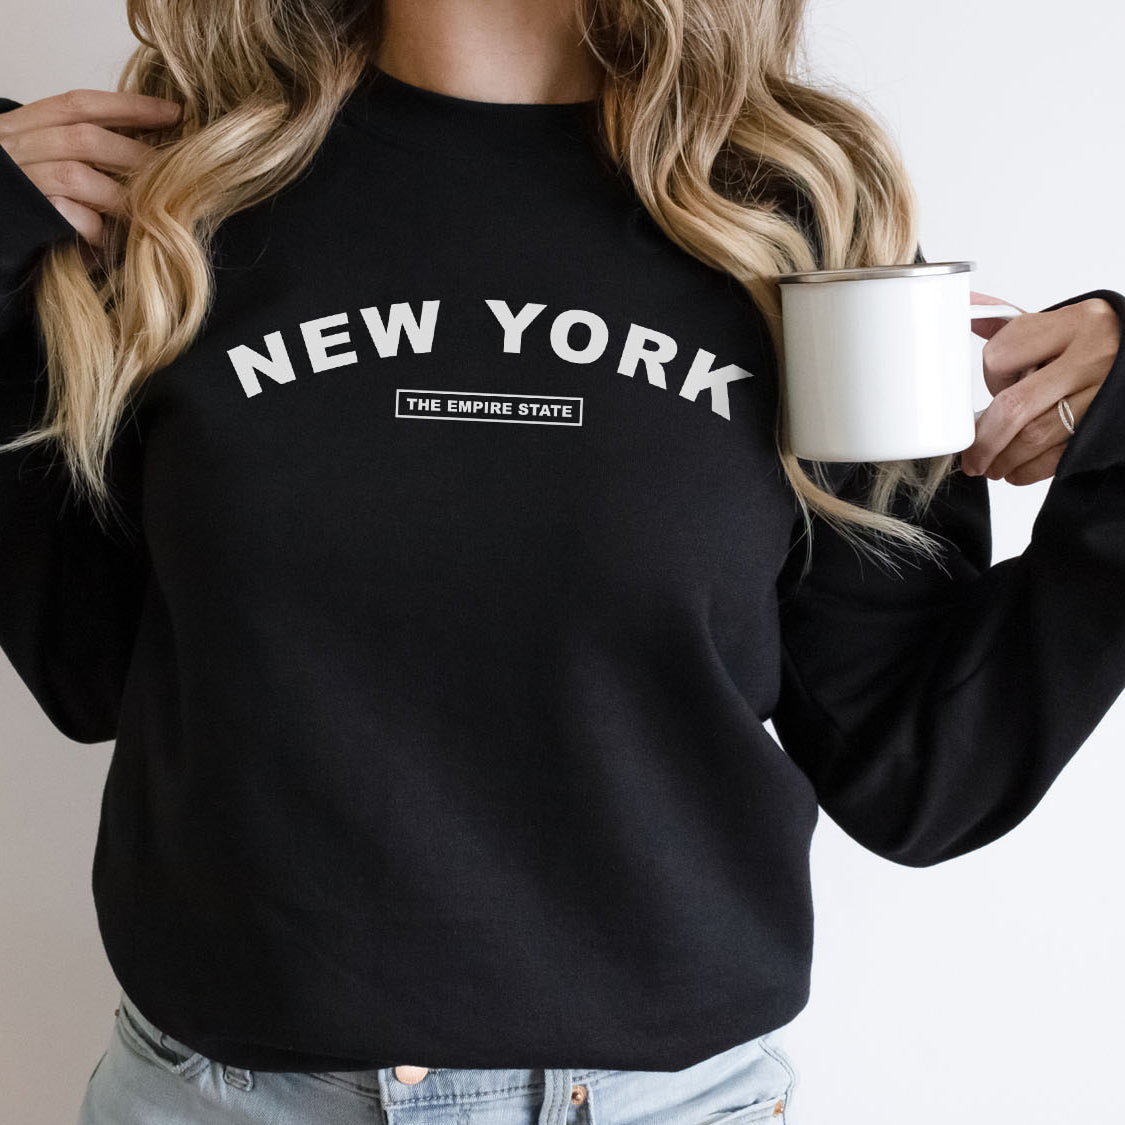 New York The Empire State Sweatshirt - United States Name & Slogan Minimal Design Printed Sweatshirt